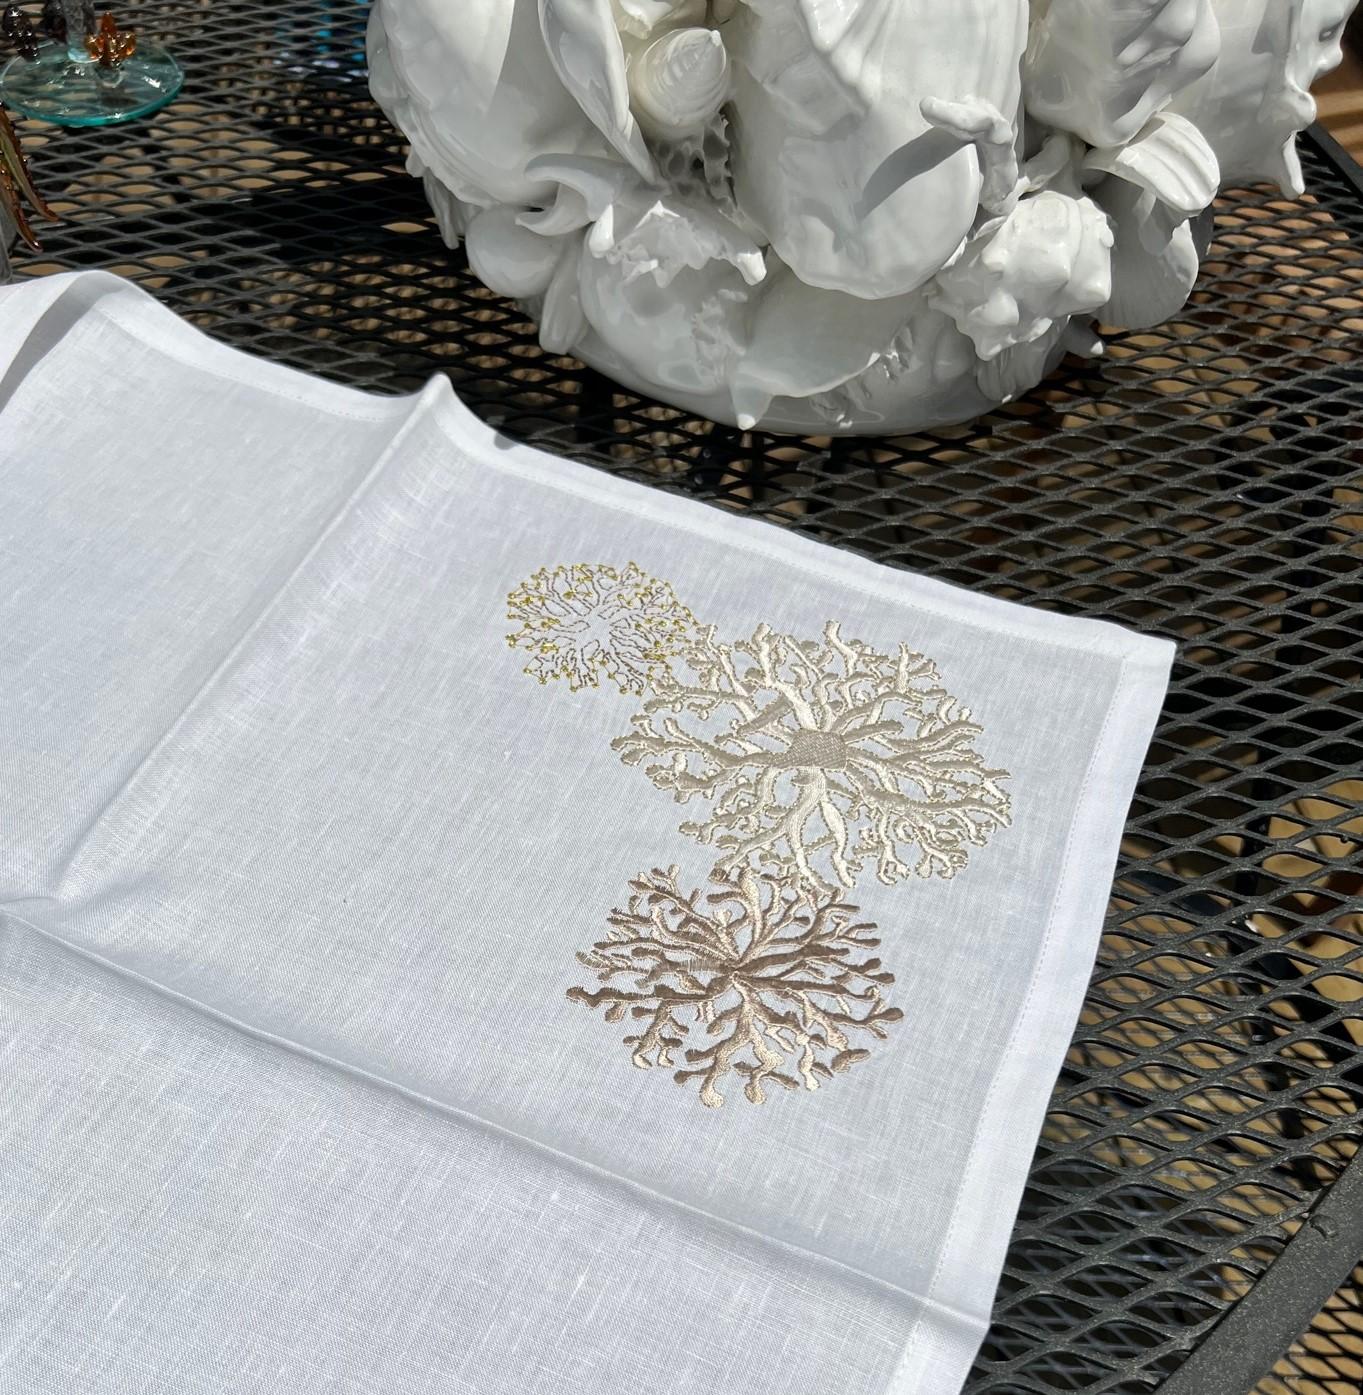 Contemporary Kim Seybert Embroidered Napkins, Golden Sea Coral on White Linen